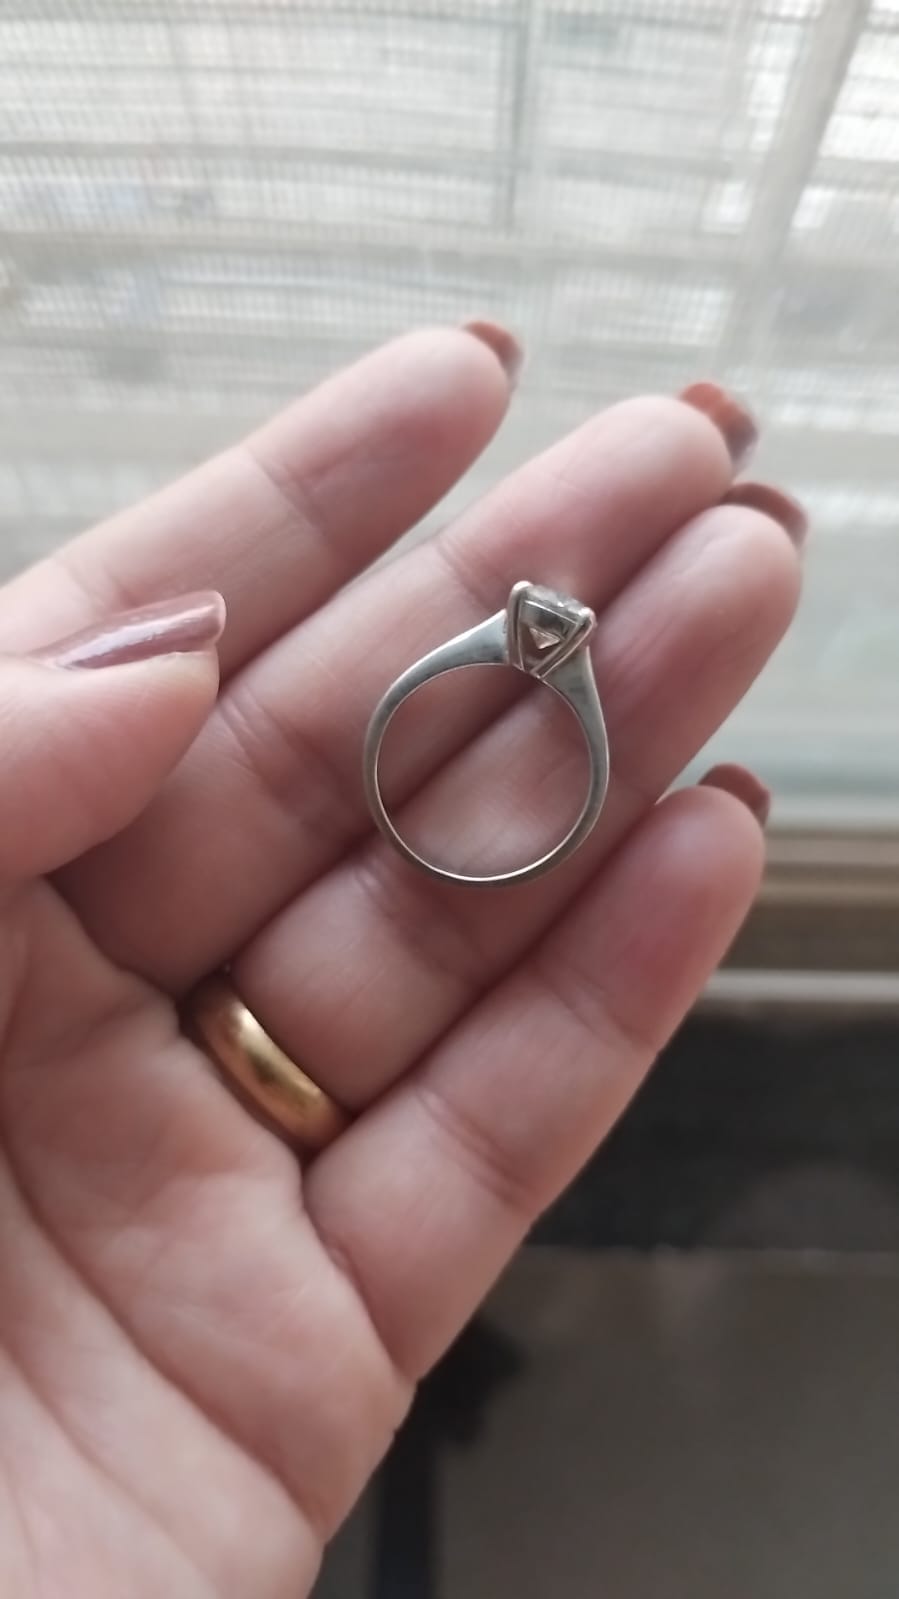 Atylyk 1 Carat Moissanite Engagement Ring Wedding Promise Platinum